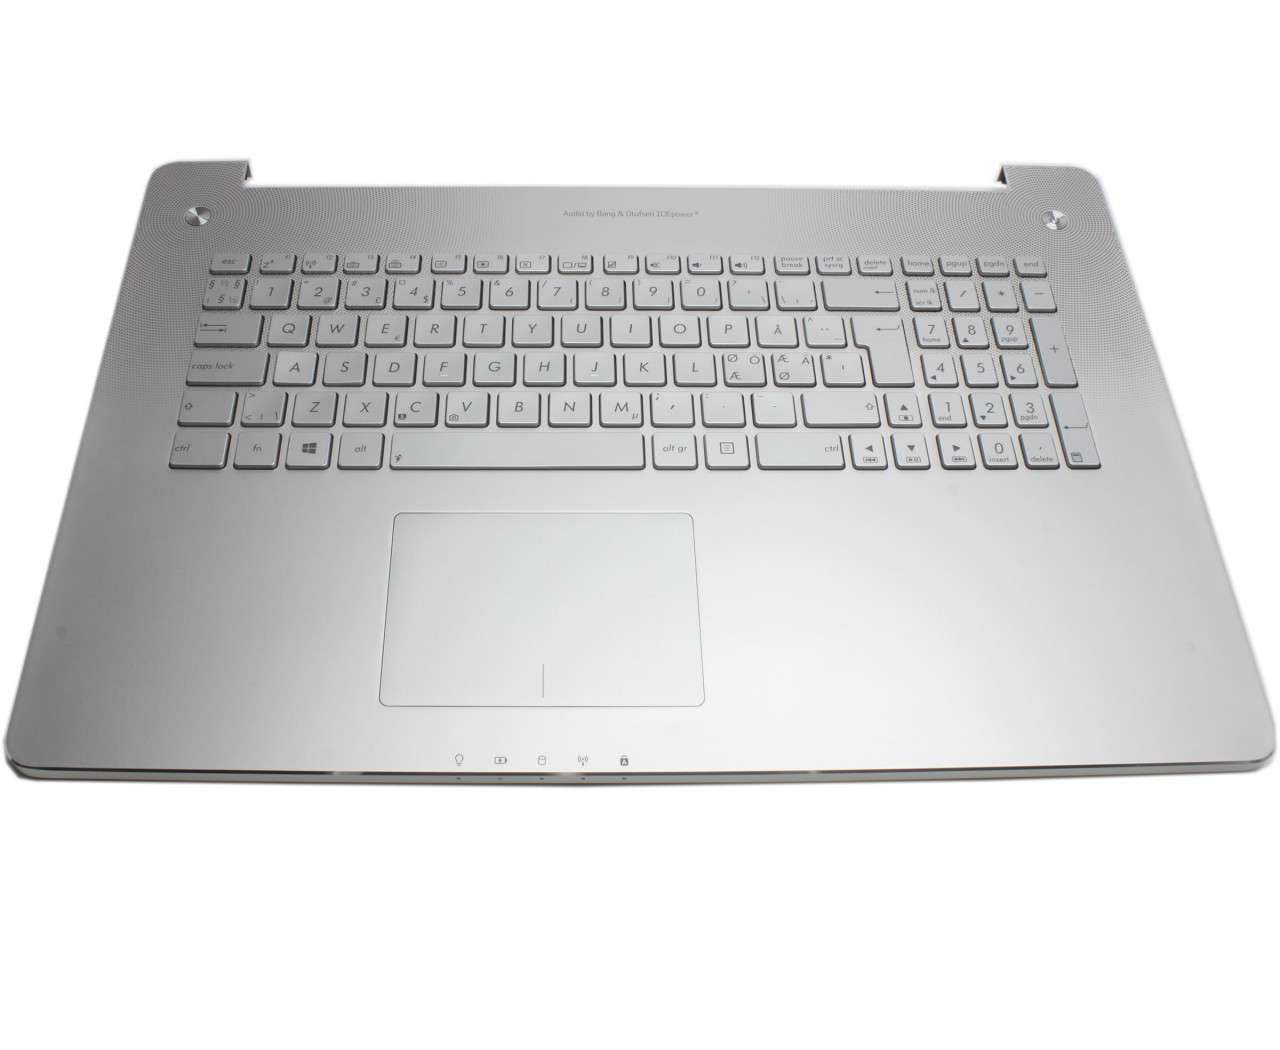 Tastatura Asus N750JK argintie cu Palmrest argintiu iluminata backlit